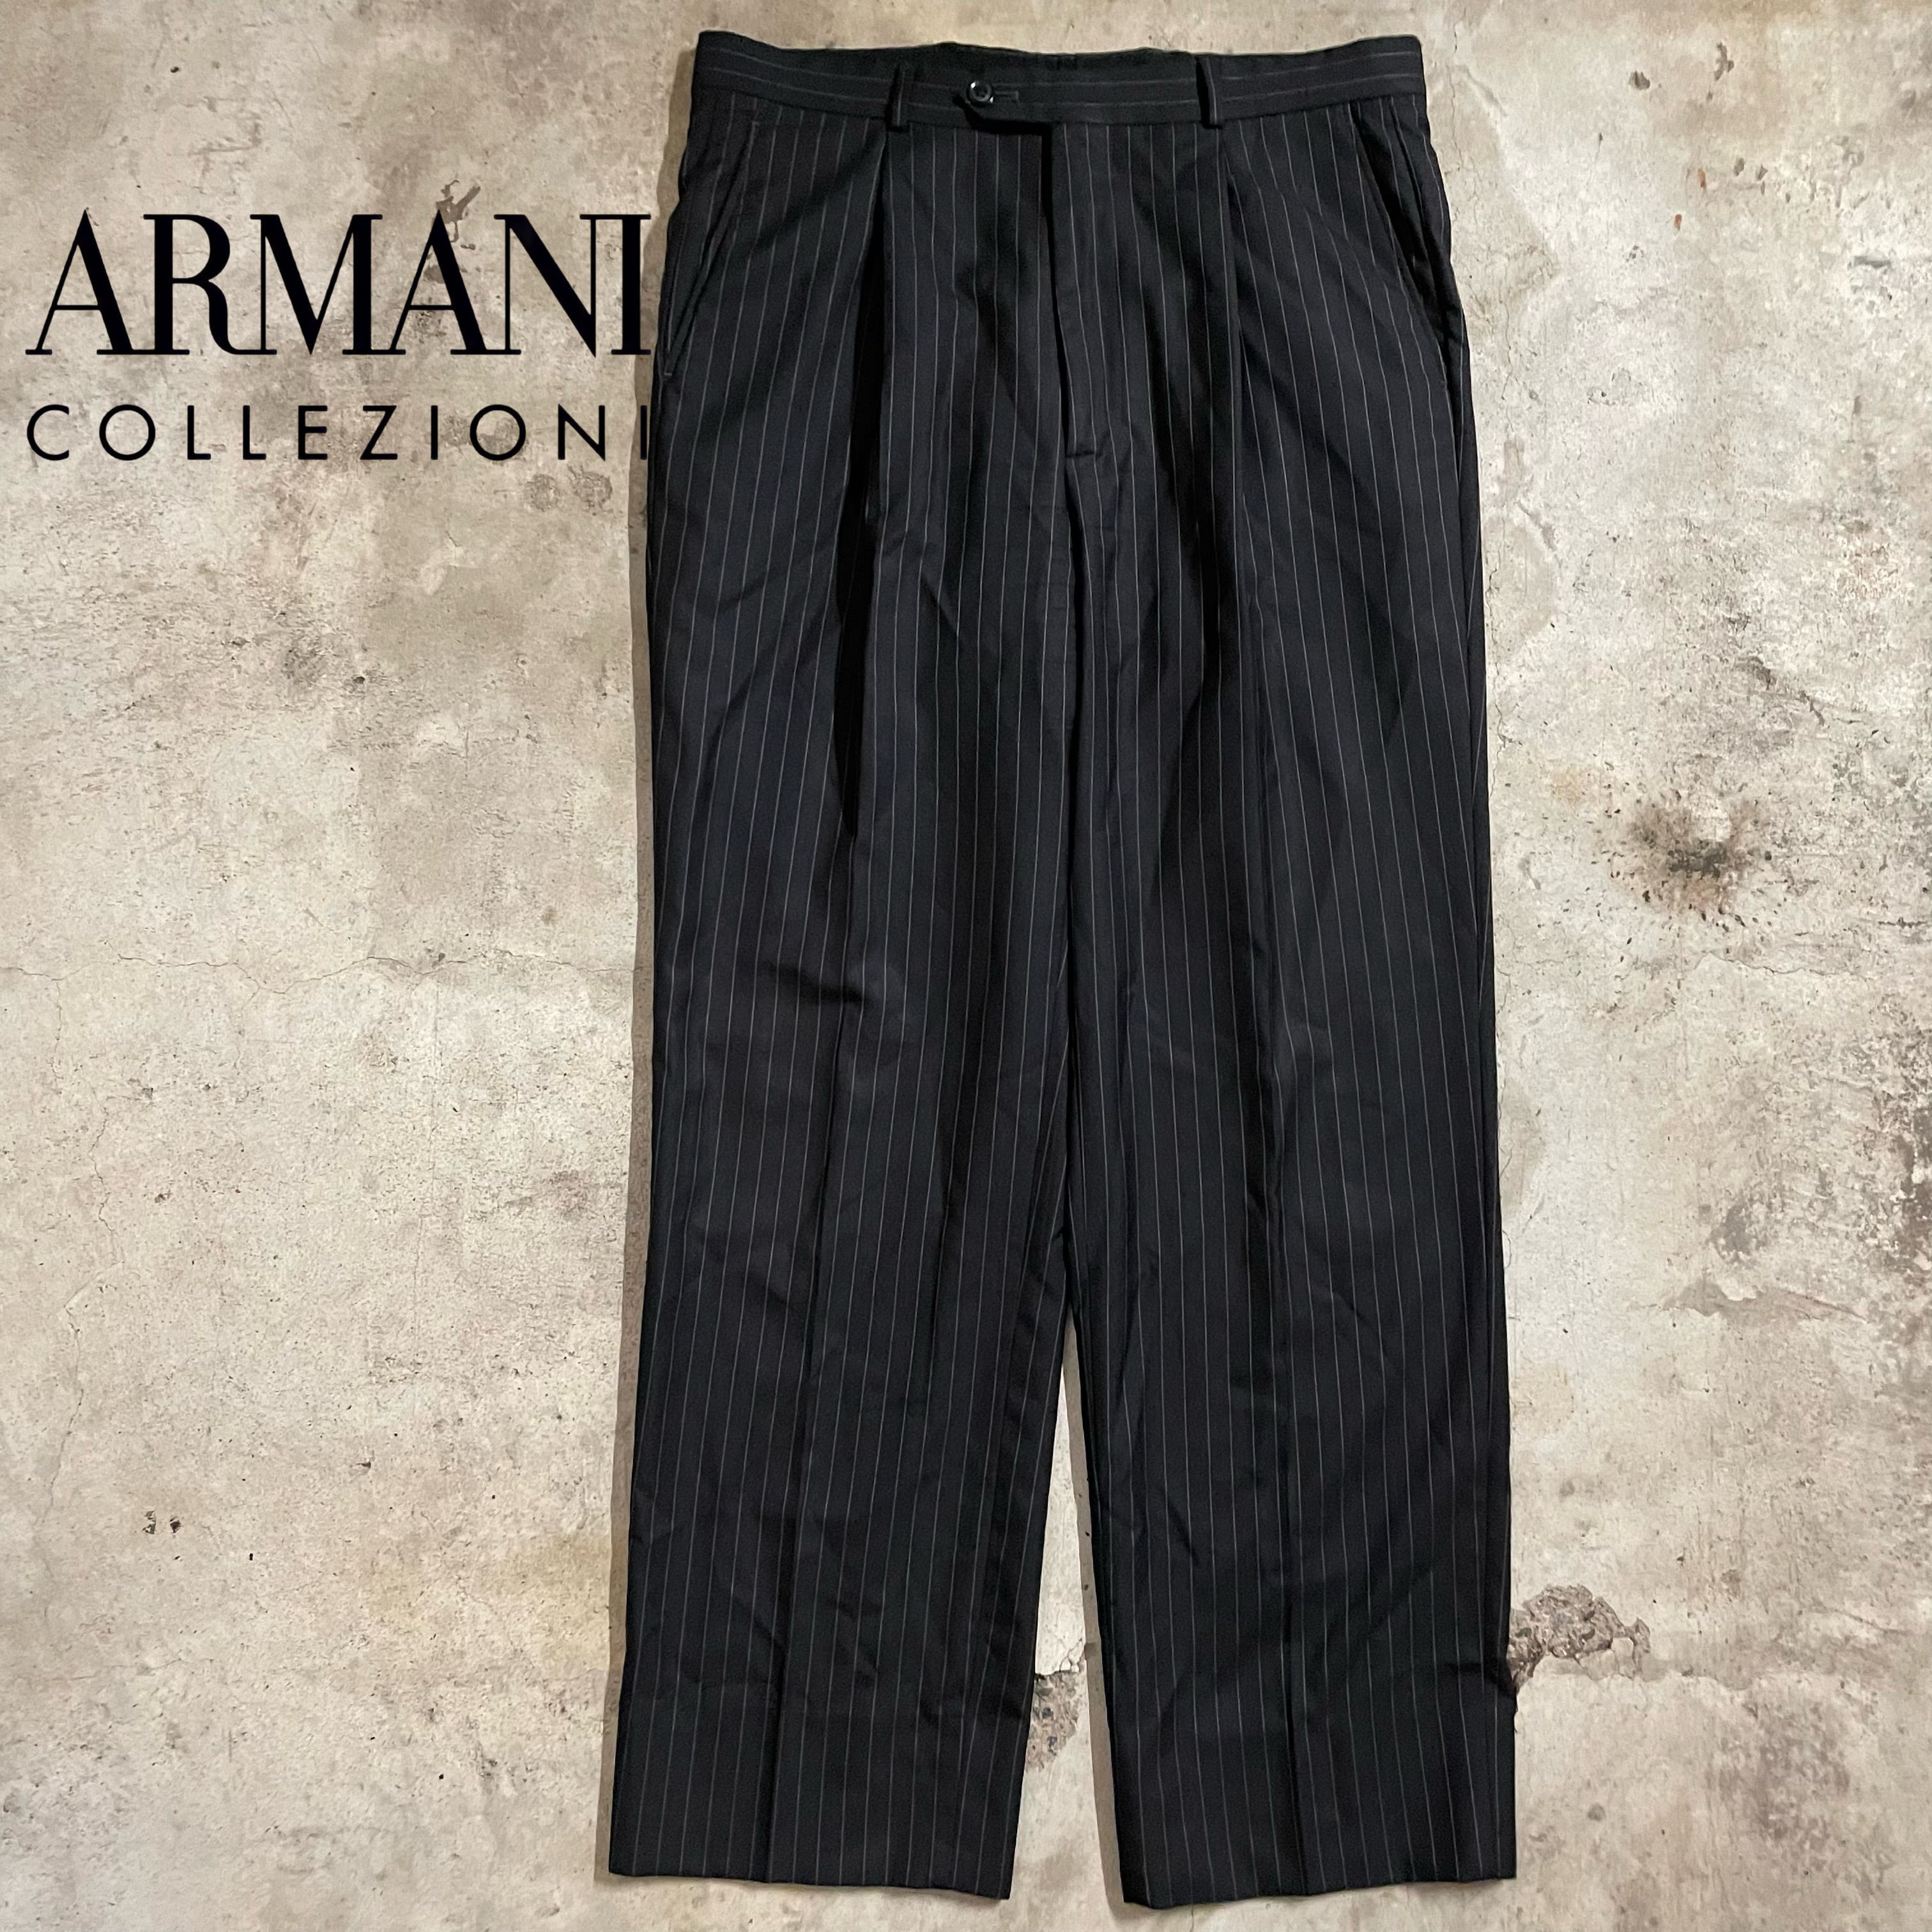 ARMANI COLLEZIONI】made in Italy wool straight slacks pants